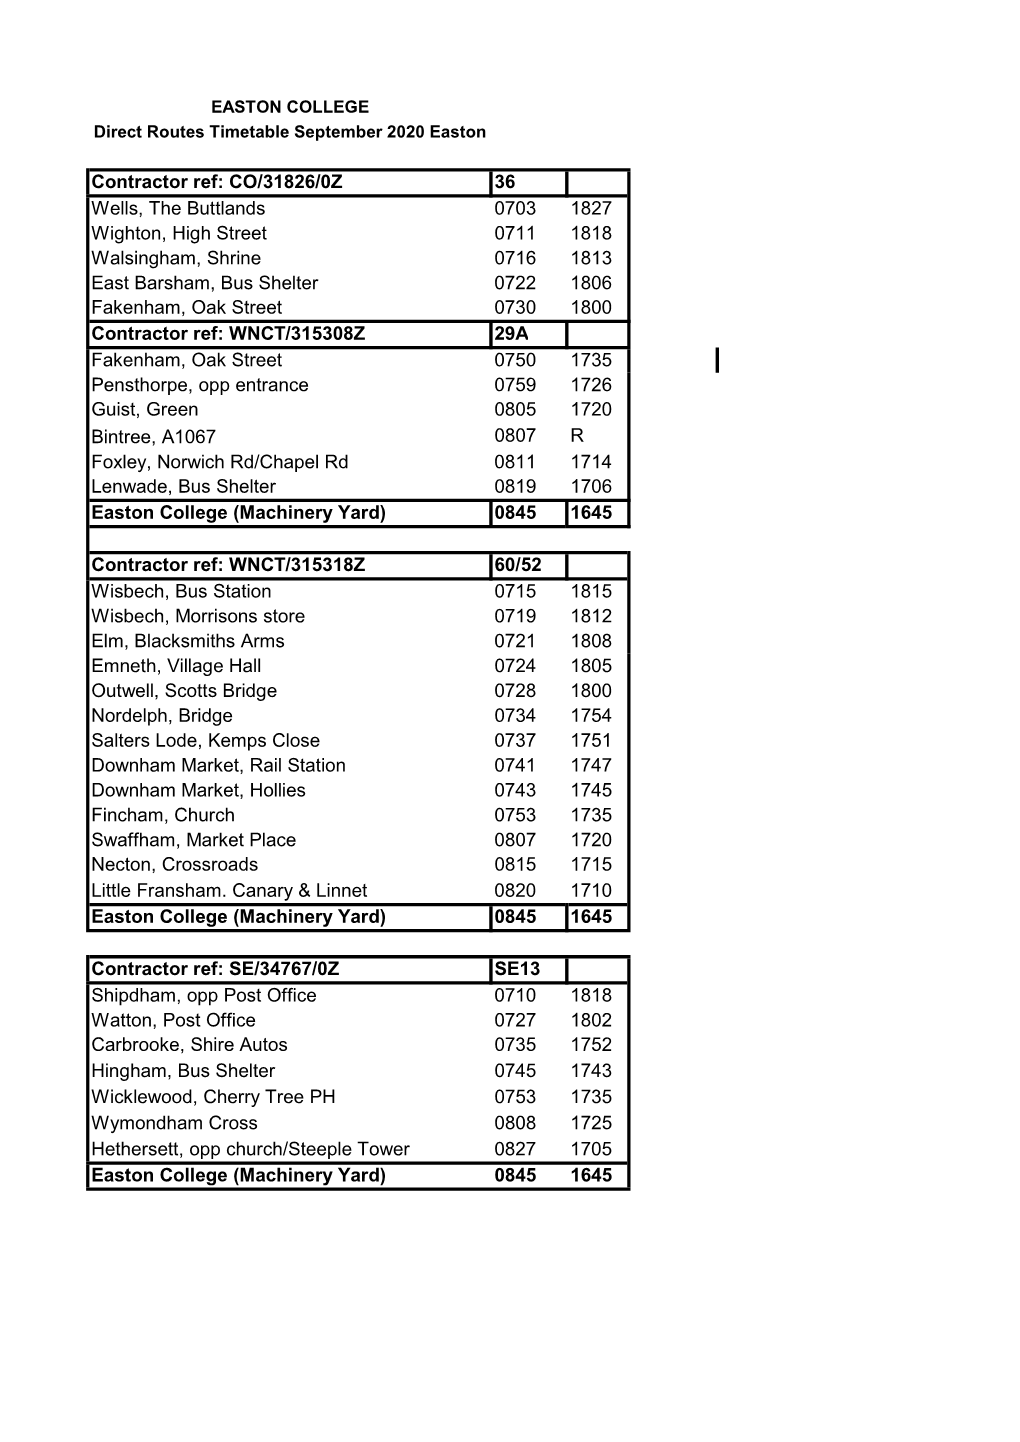 Easton College Timetable 2020 (Clare Burgess).Xlsx